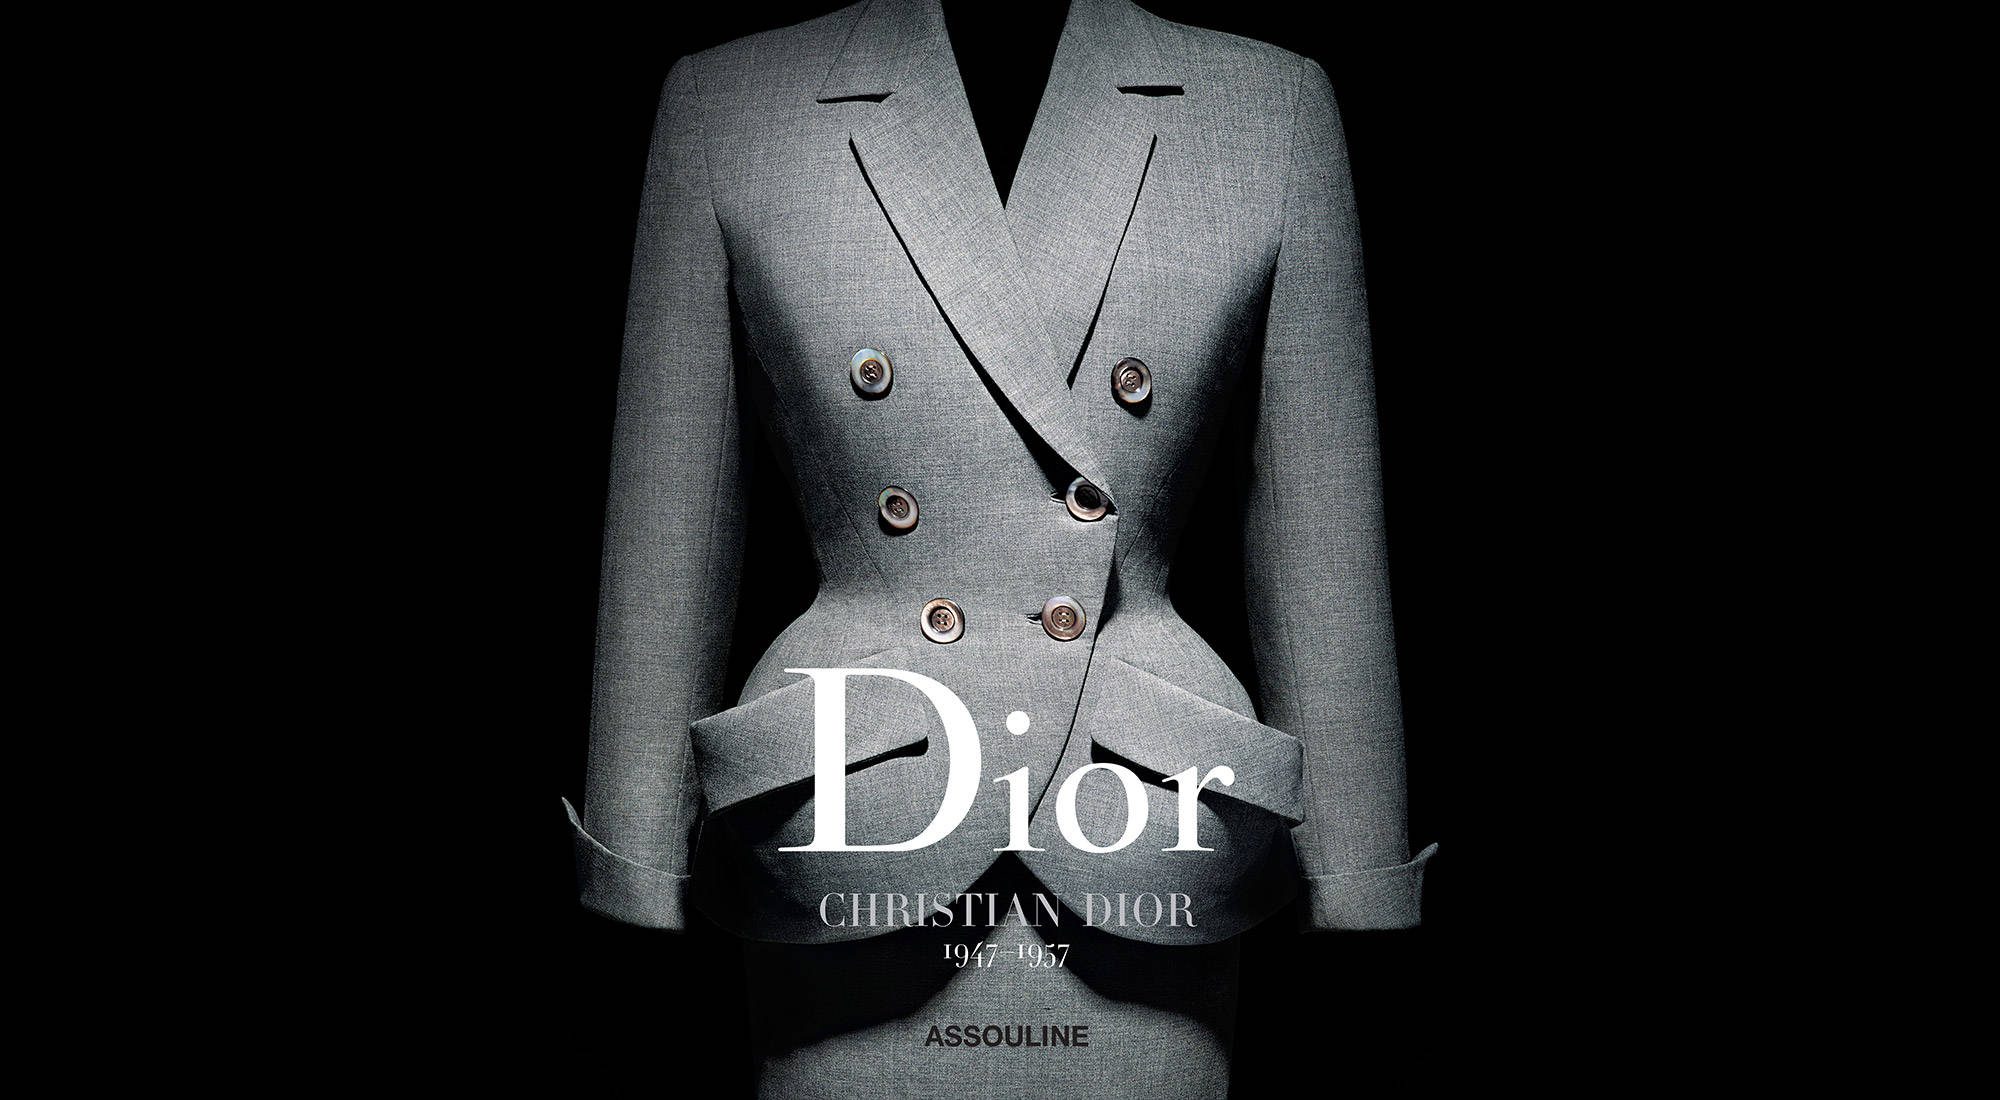 Dior By Christian Dior: 1947-1957